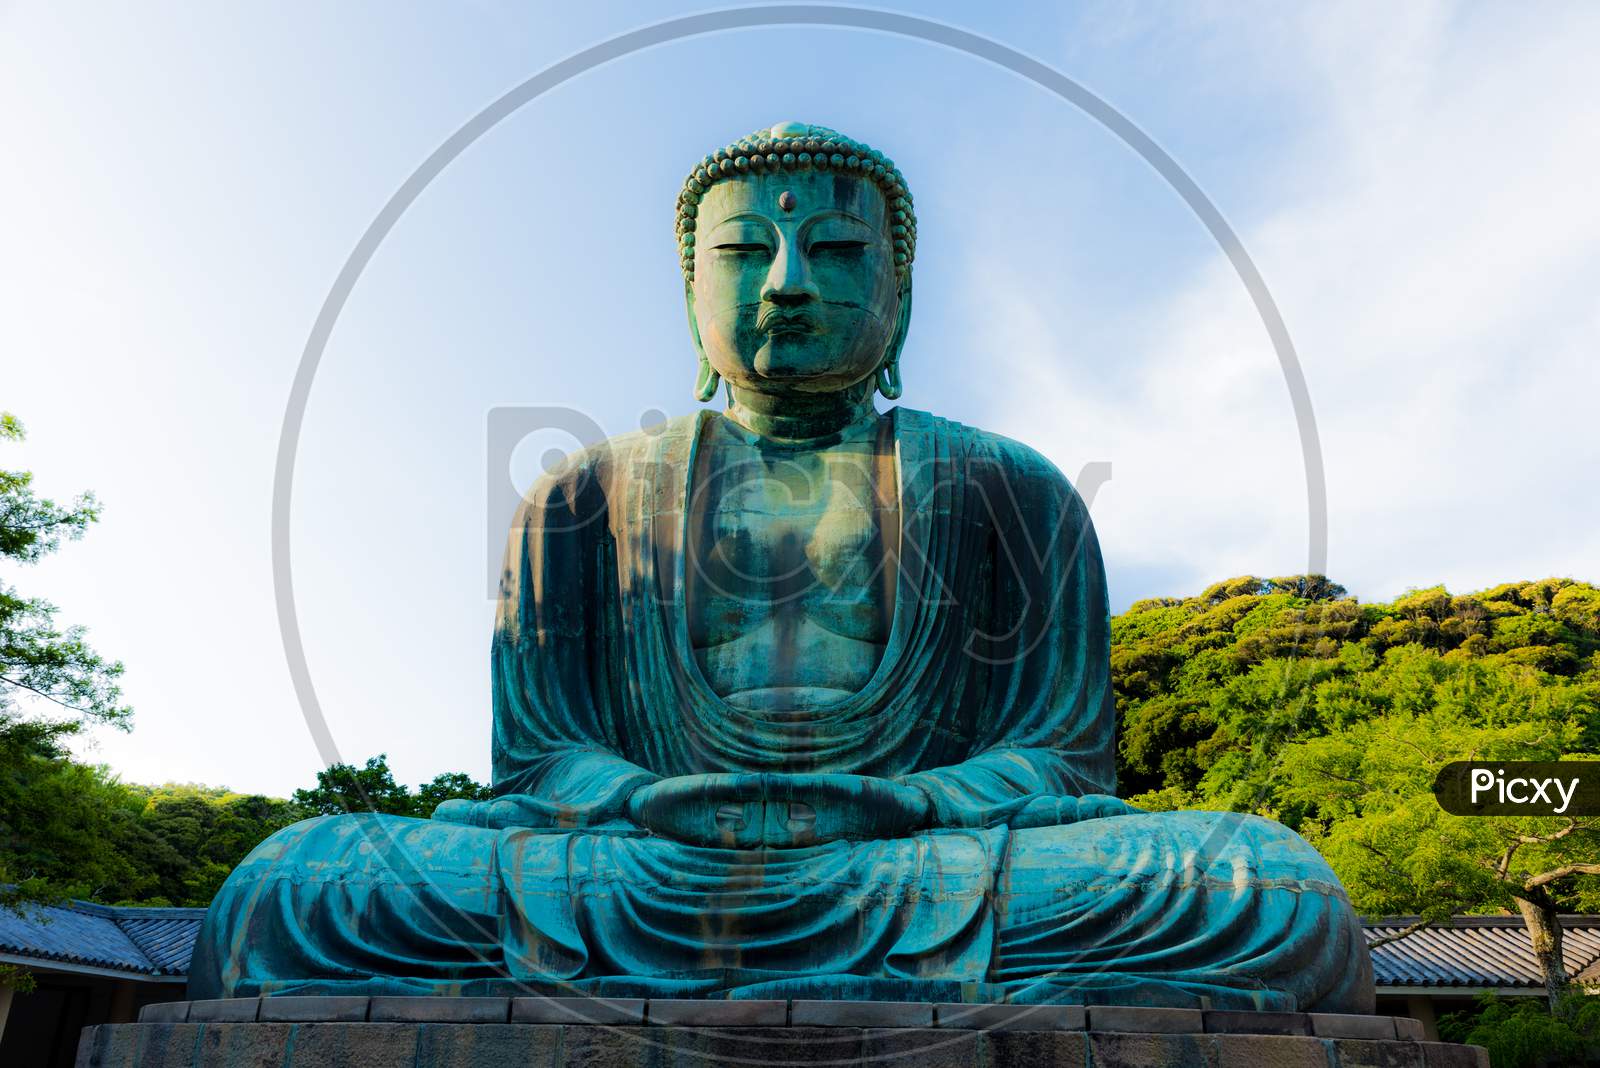 The Giant Lord Buddha